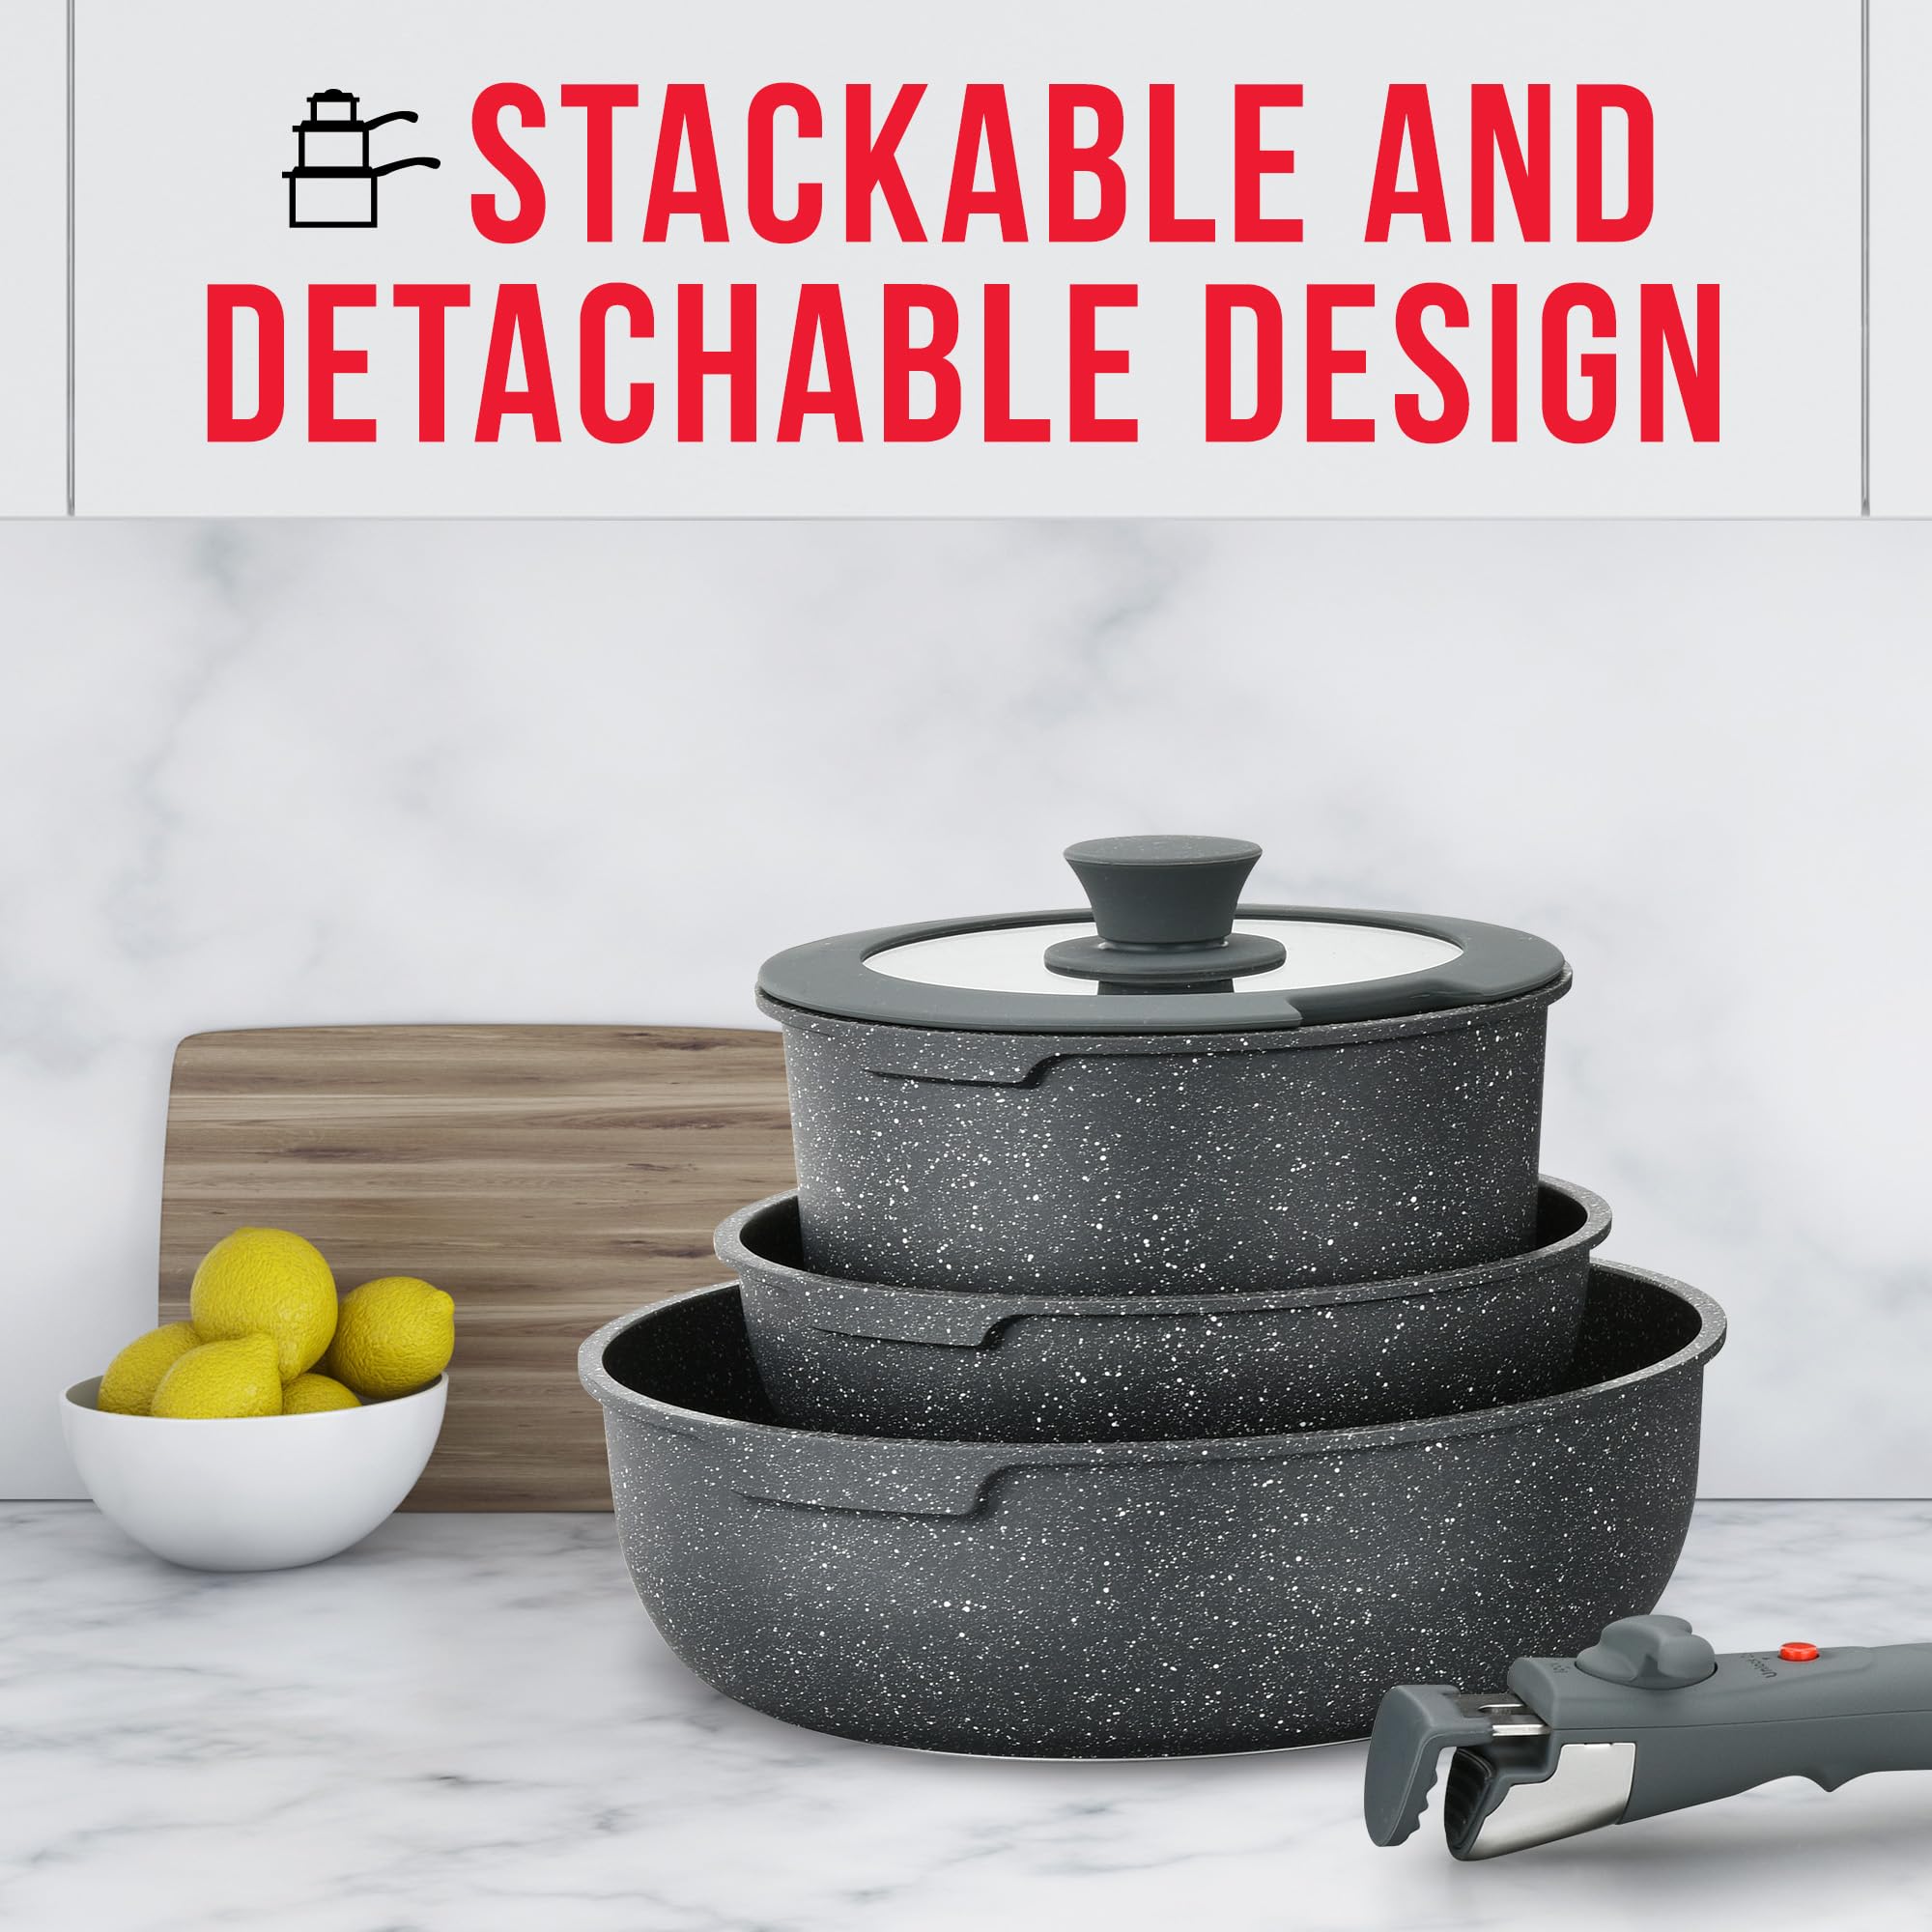 Bakken-Swiss Detachable 15-Piece Cookware Set – Granite Non-Stick – Eco-Friendly – stackable Removable Handles – for All Stoves & Oven-Safe - marble Black coating